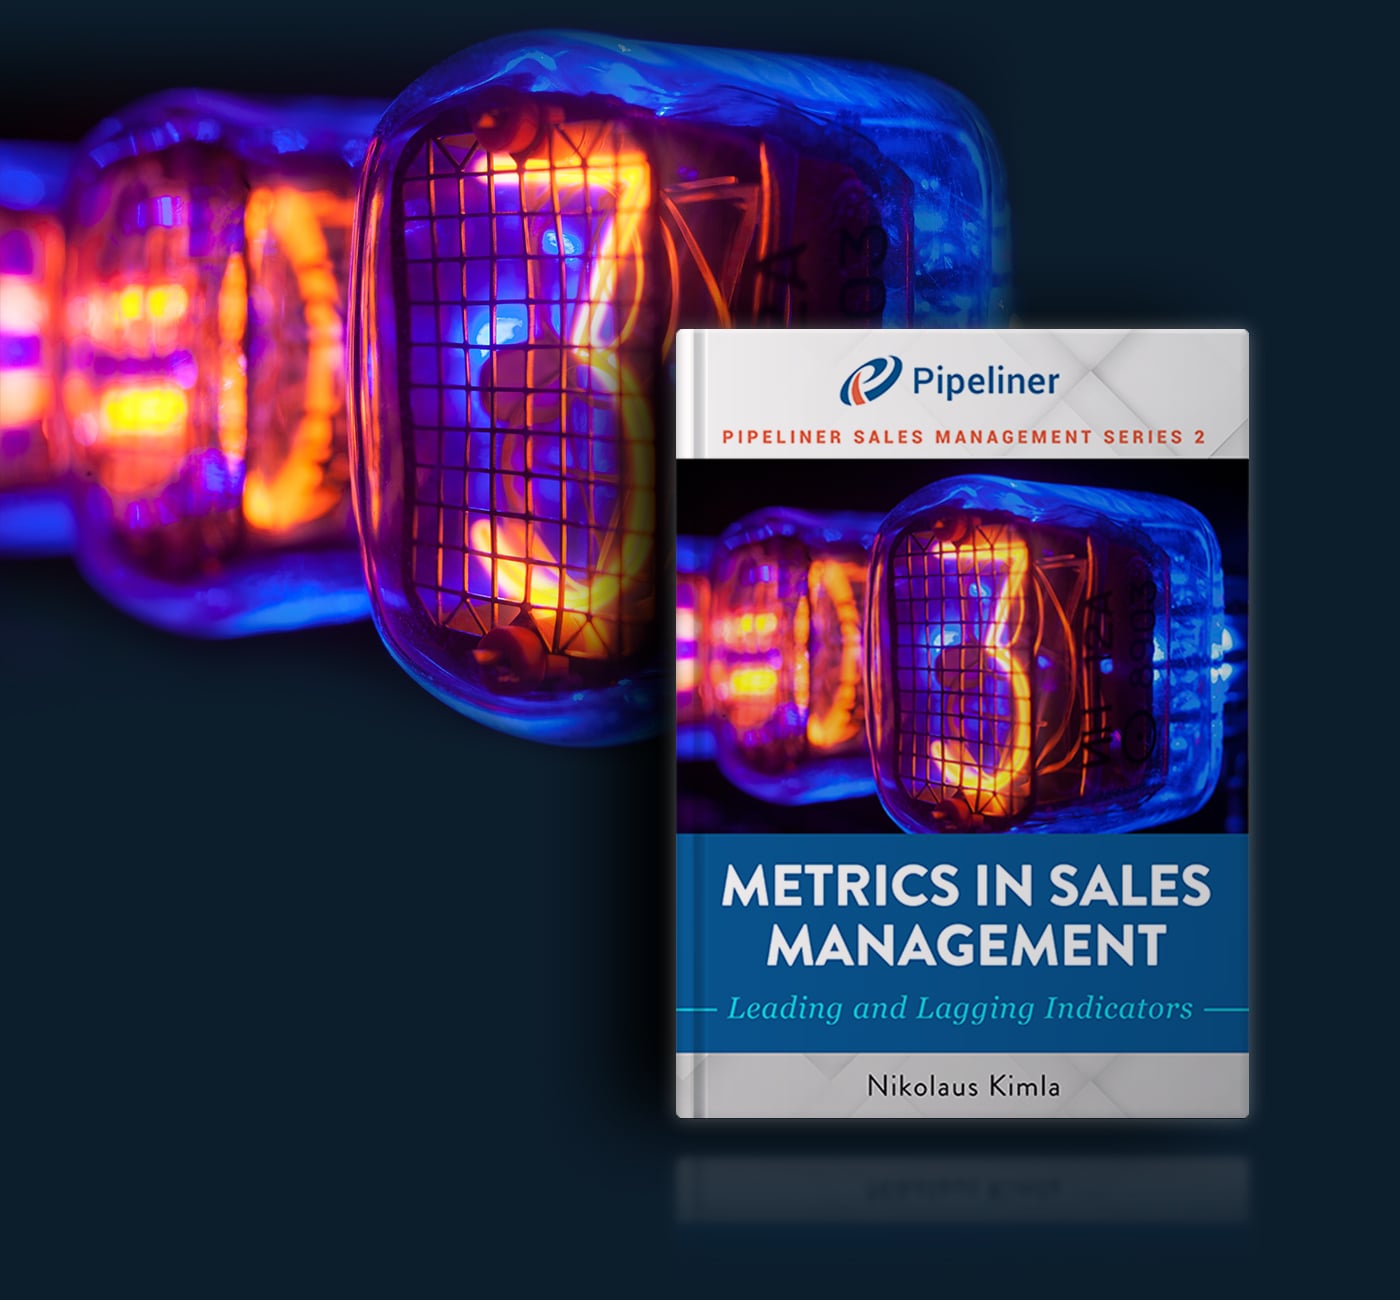 Metrics in sales management - Leading and Lagging Indicators